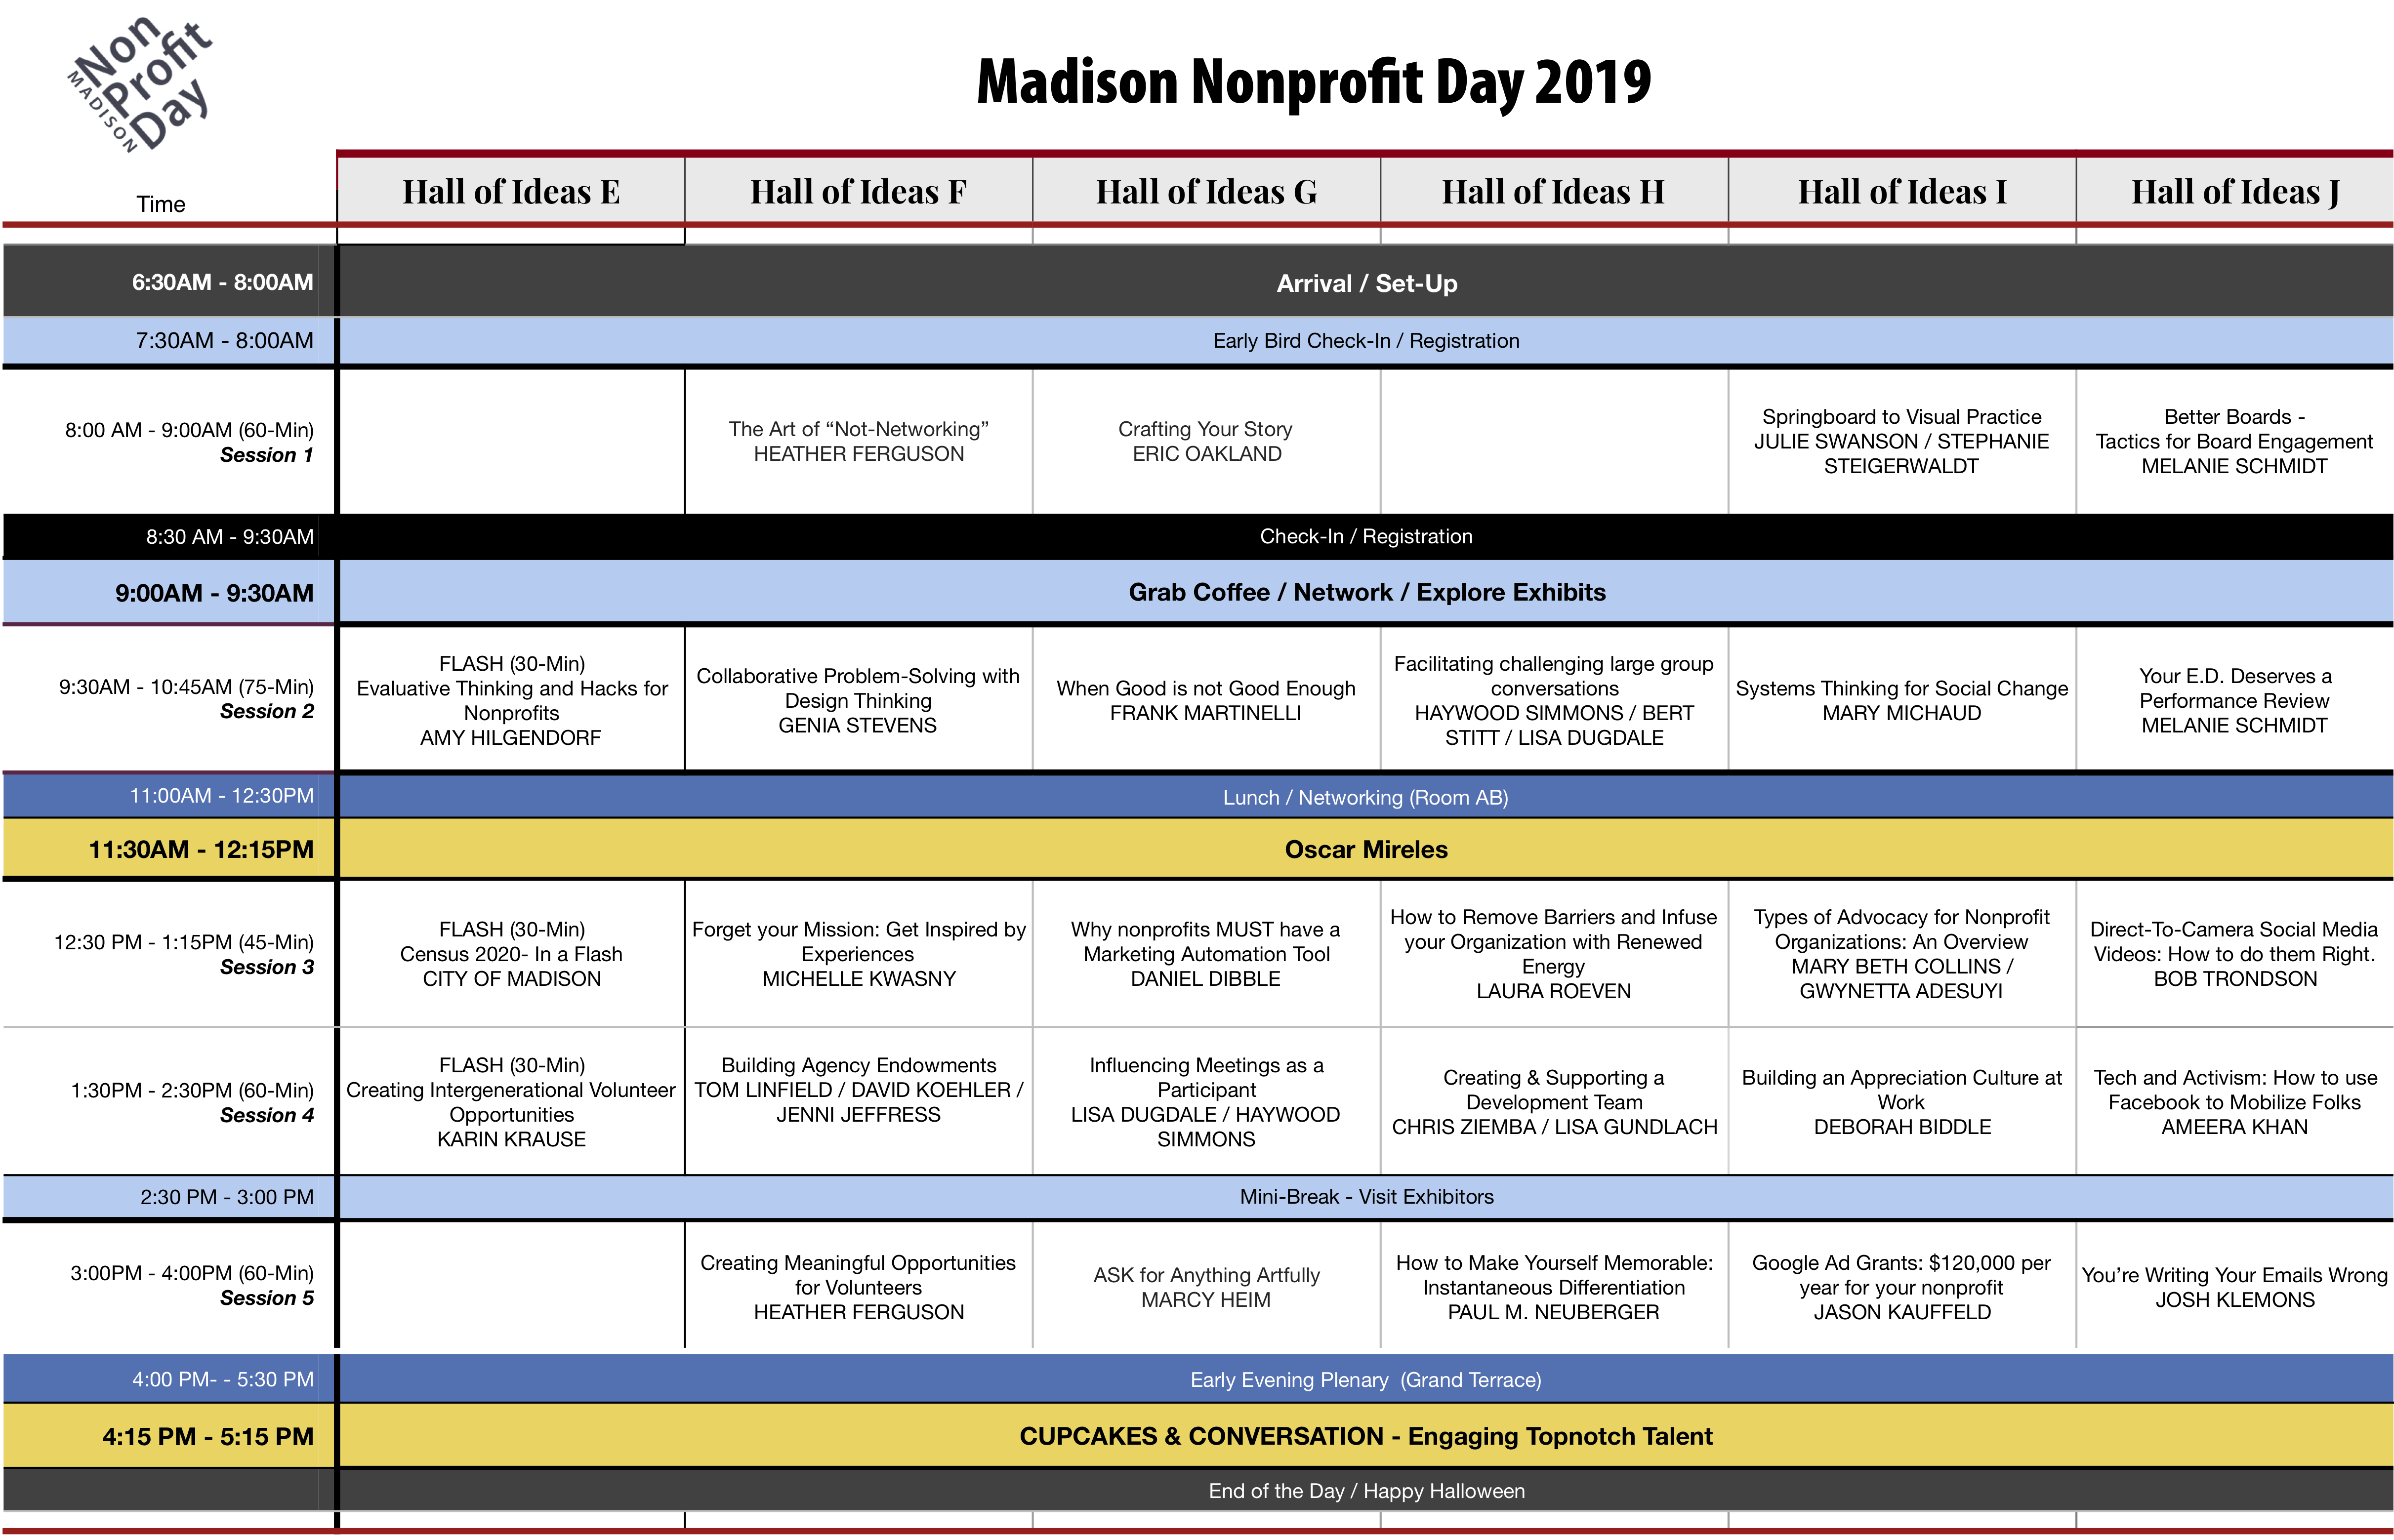 Madison Nonprofit Day schedule